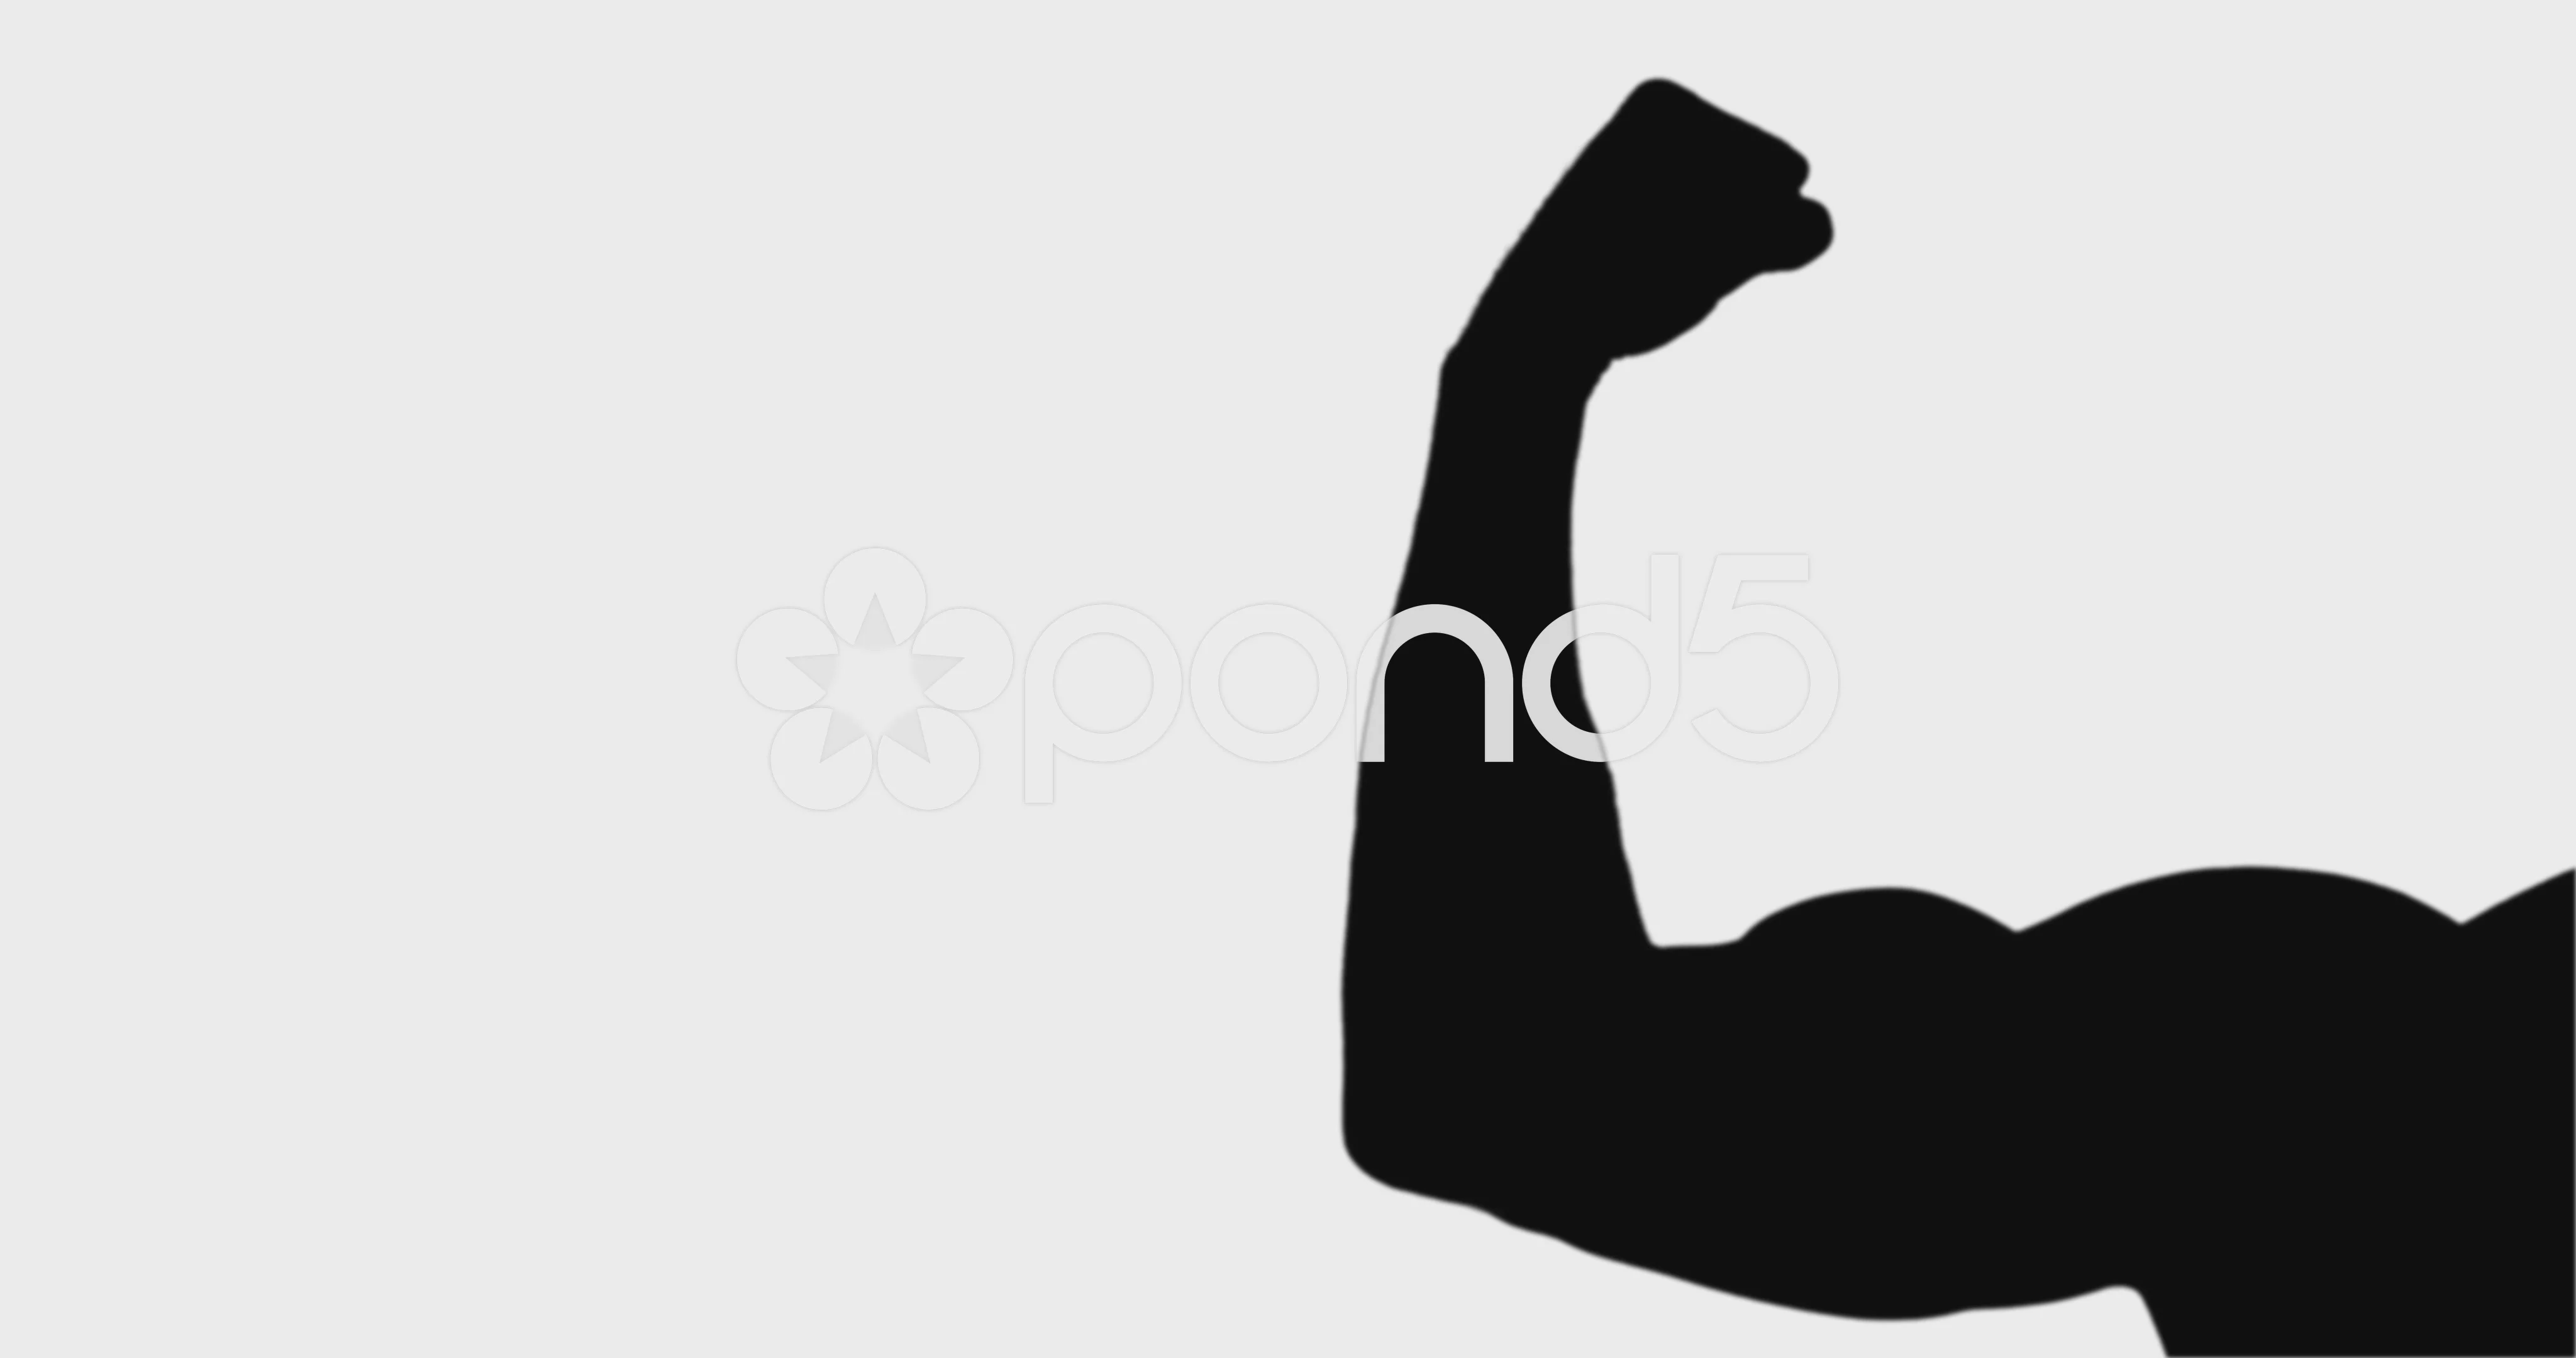 flexed arm silhouette